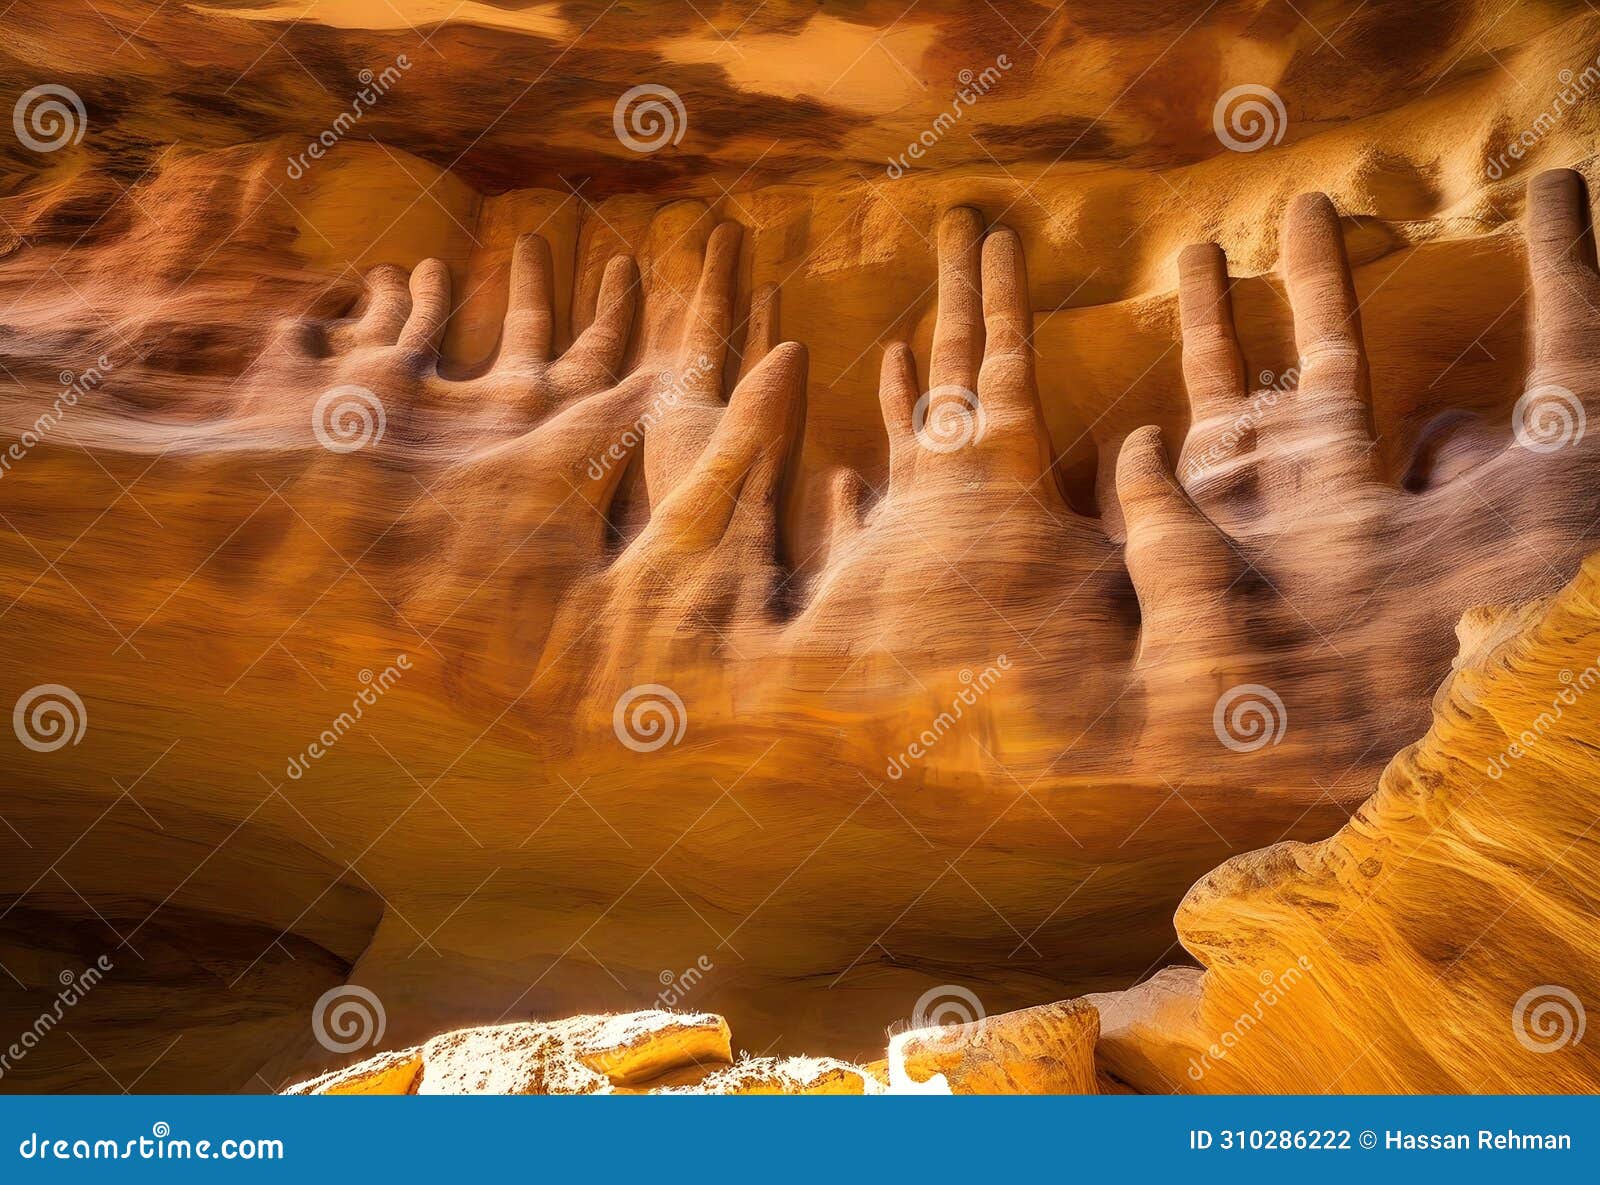 famous paintings of hands cueva de las manos. santa cruz, argentina